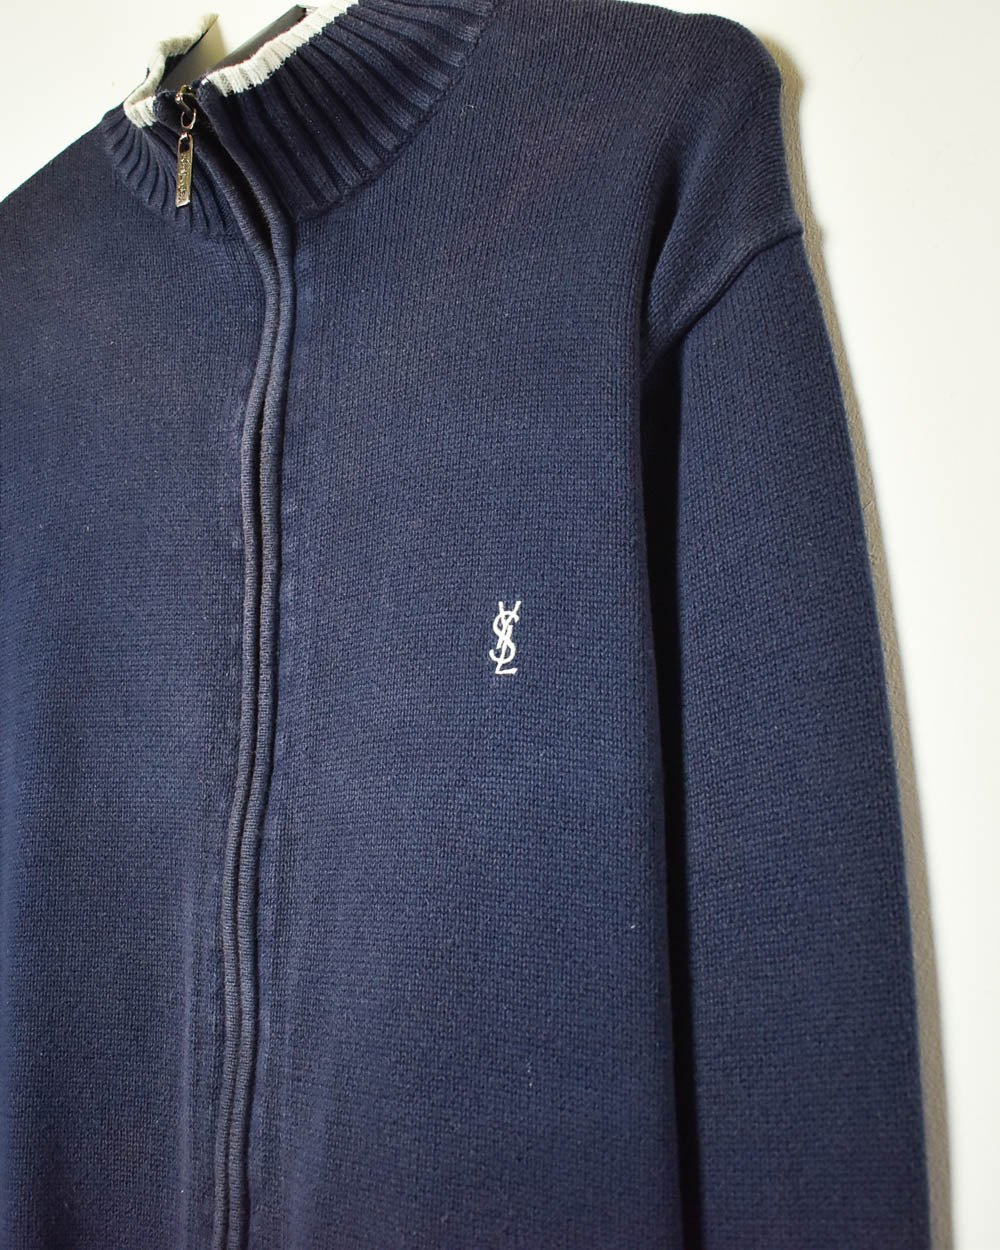 Navy Yves Saint Laurent Zip-Through Knitted Sweatshirt - Large